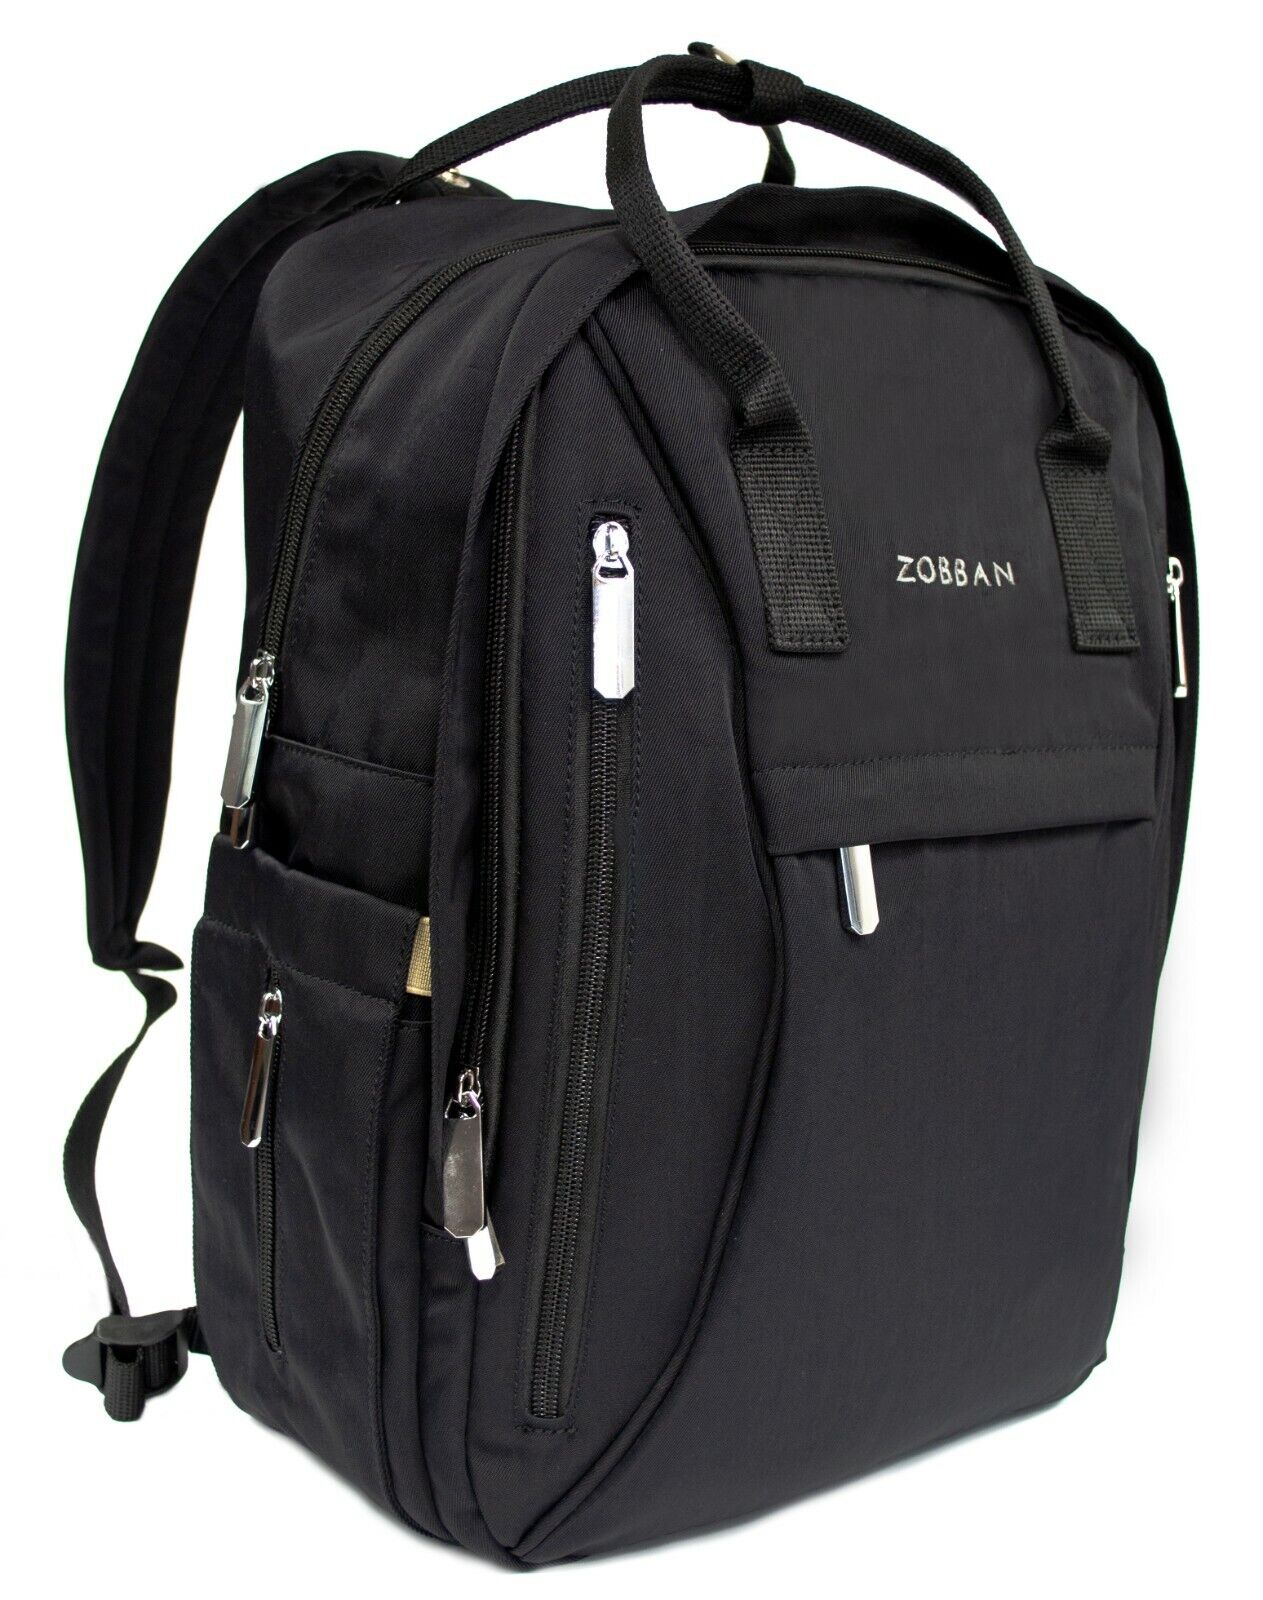 Laptop Backpack for Men Women, 14 Inch, Travel, Baby, School, Work - SEE VIDEO